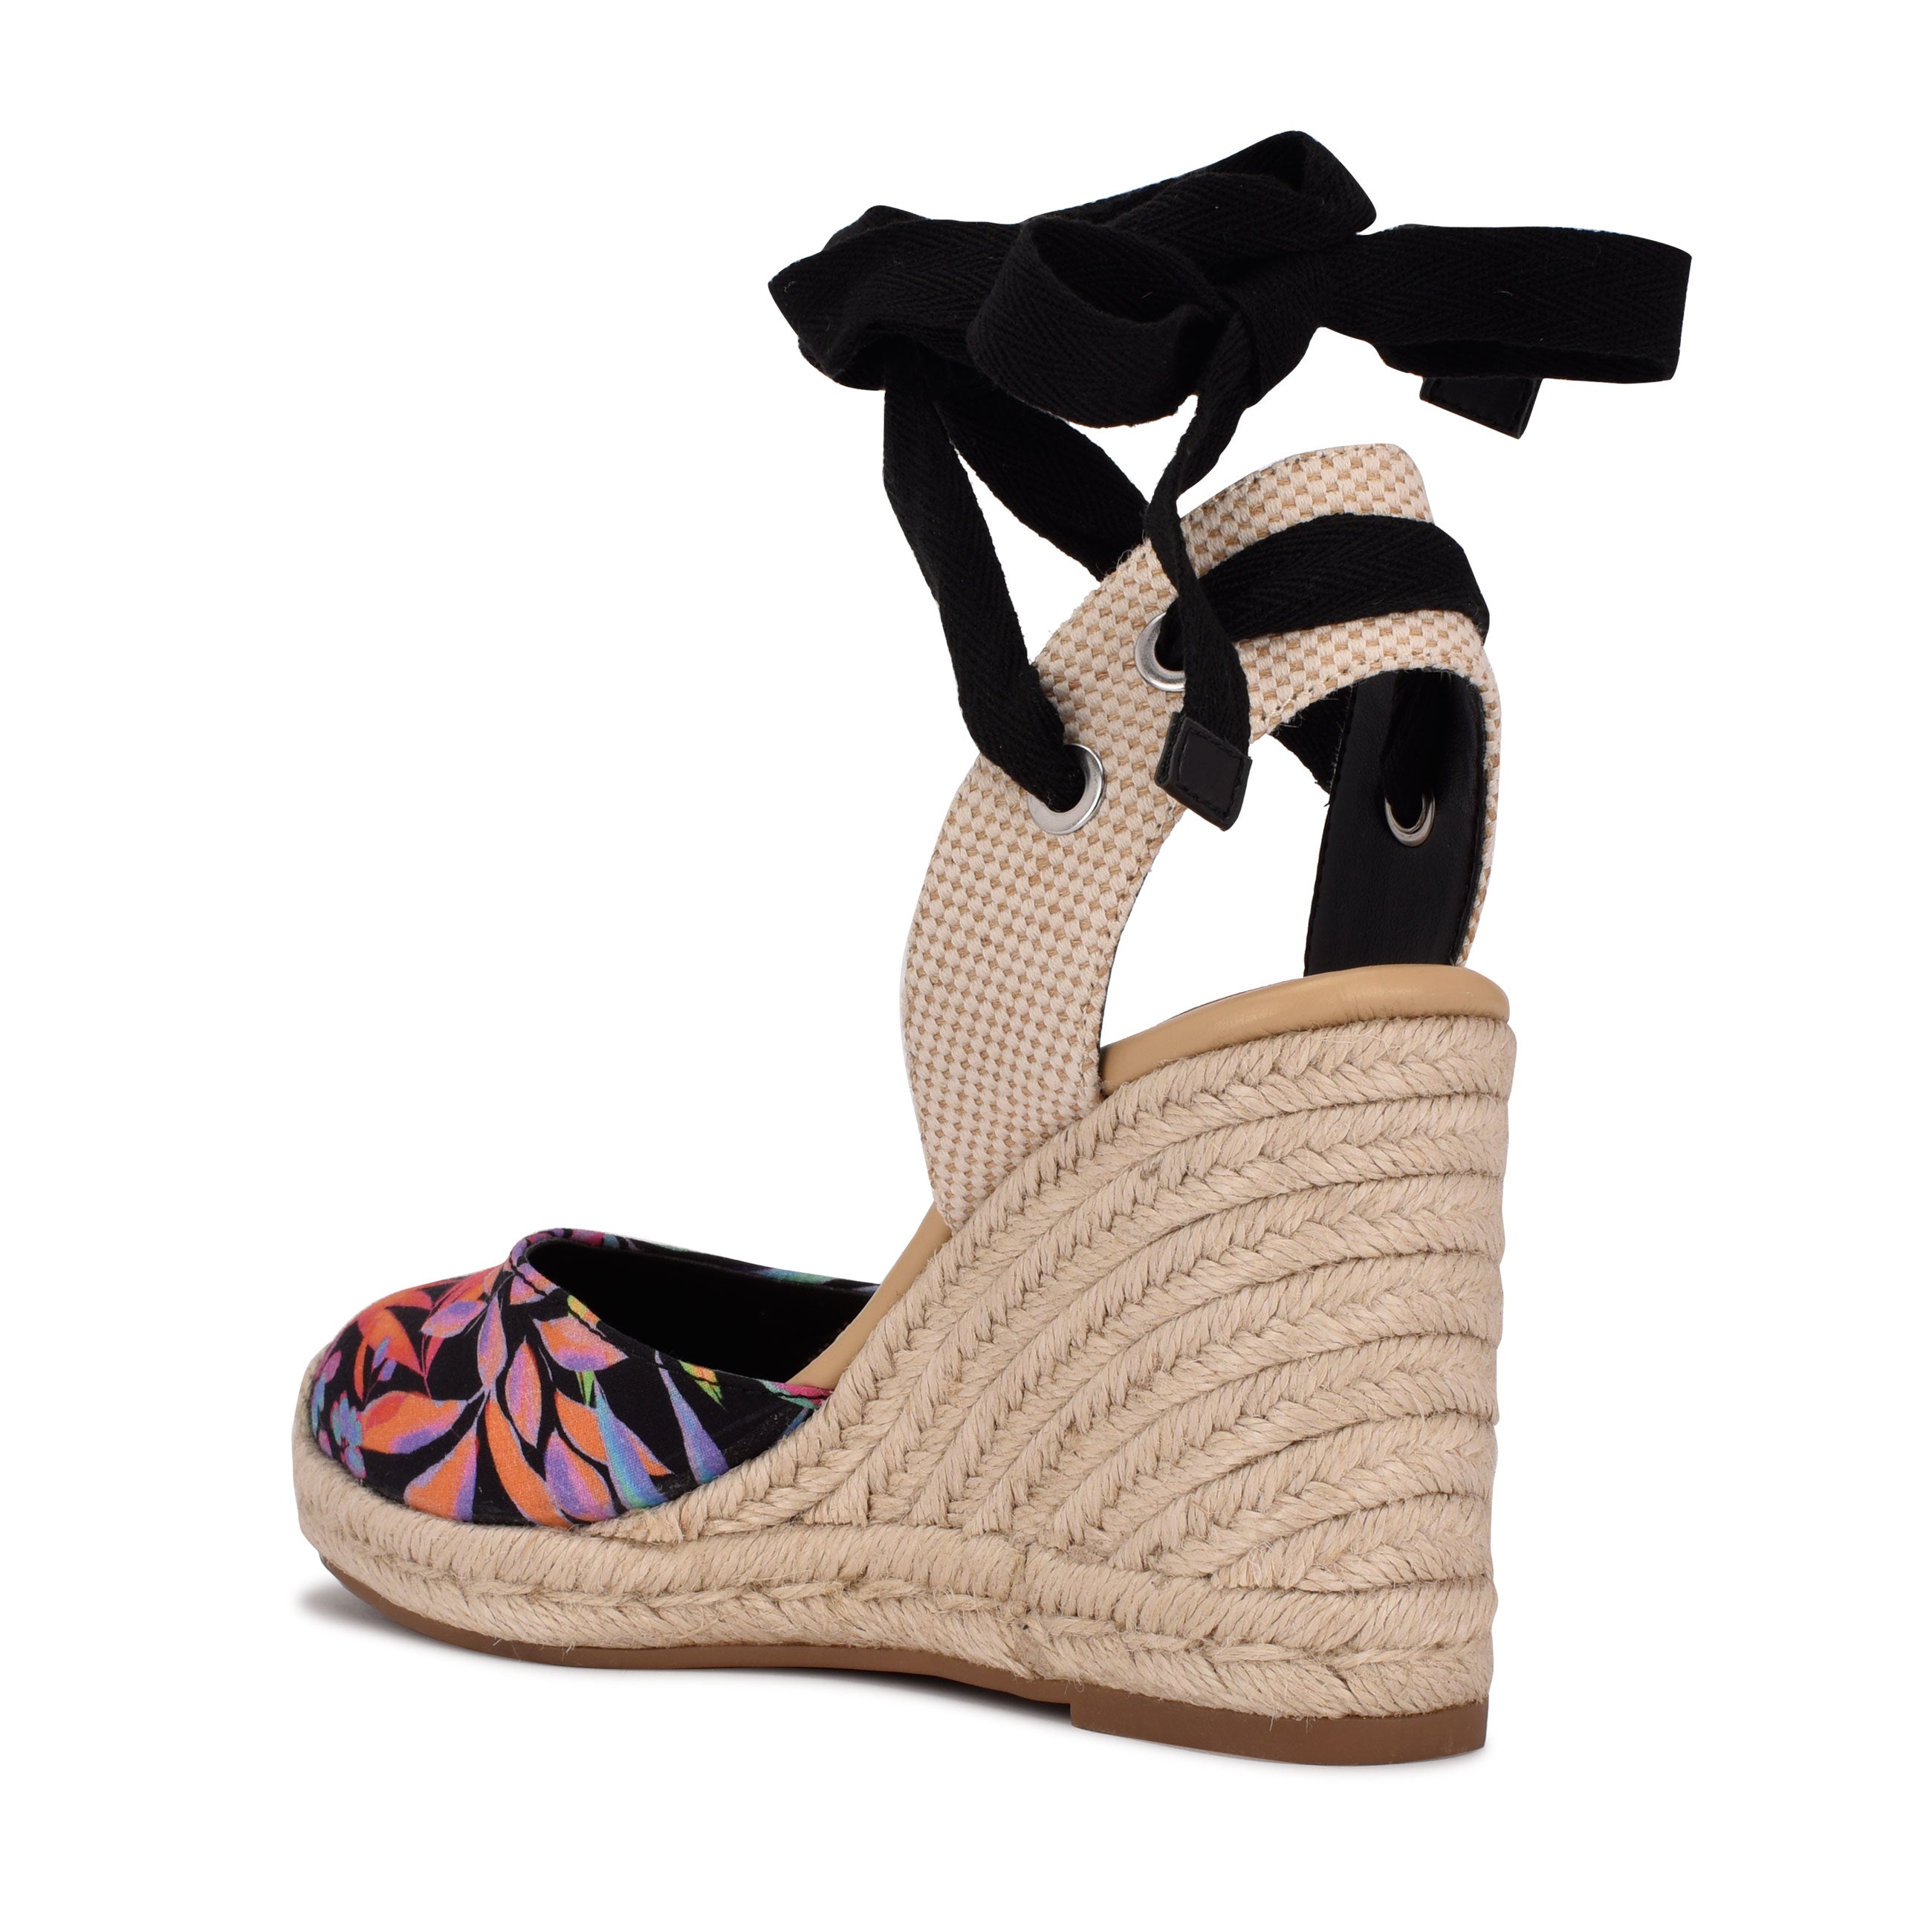  Senodin Women'S Espadrilles Wedges Sandals Platform Lace Up  Ankle Open Toe Wedges Sandals Summer Wedding Shoes | Platforms & Wedges